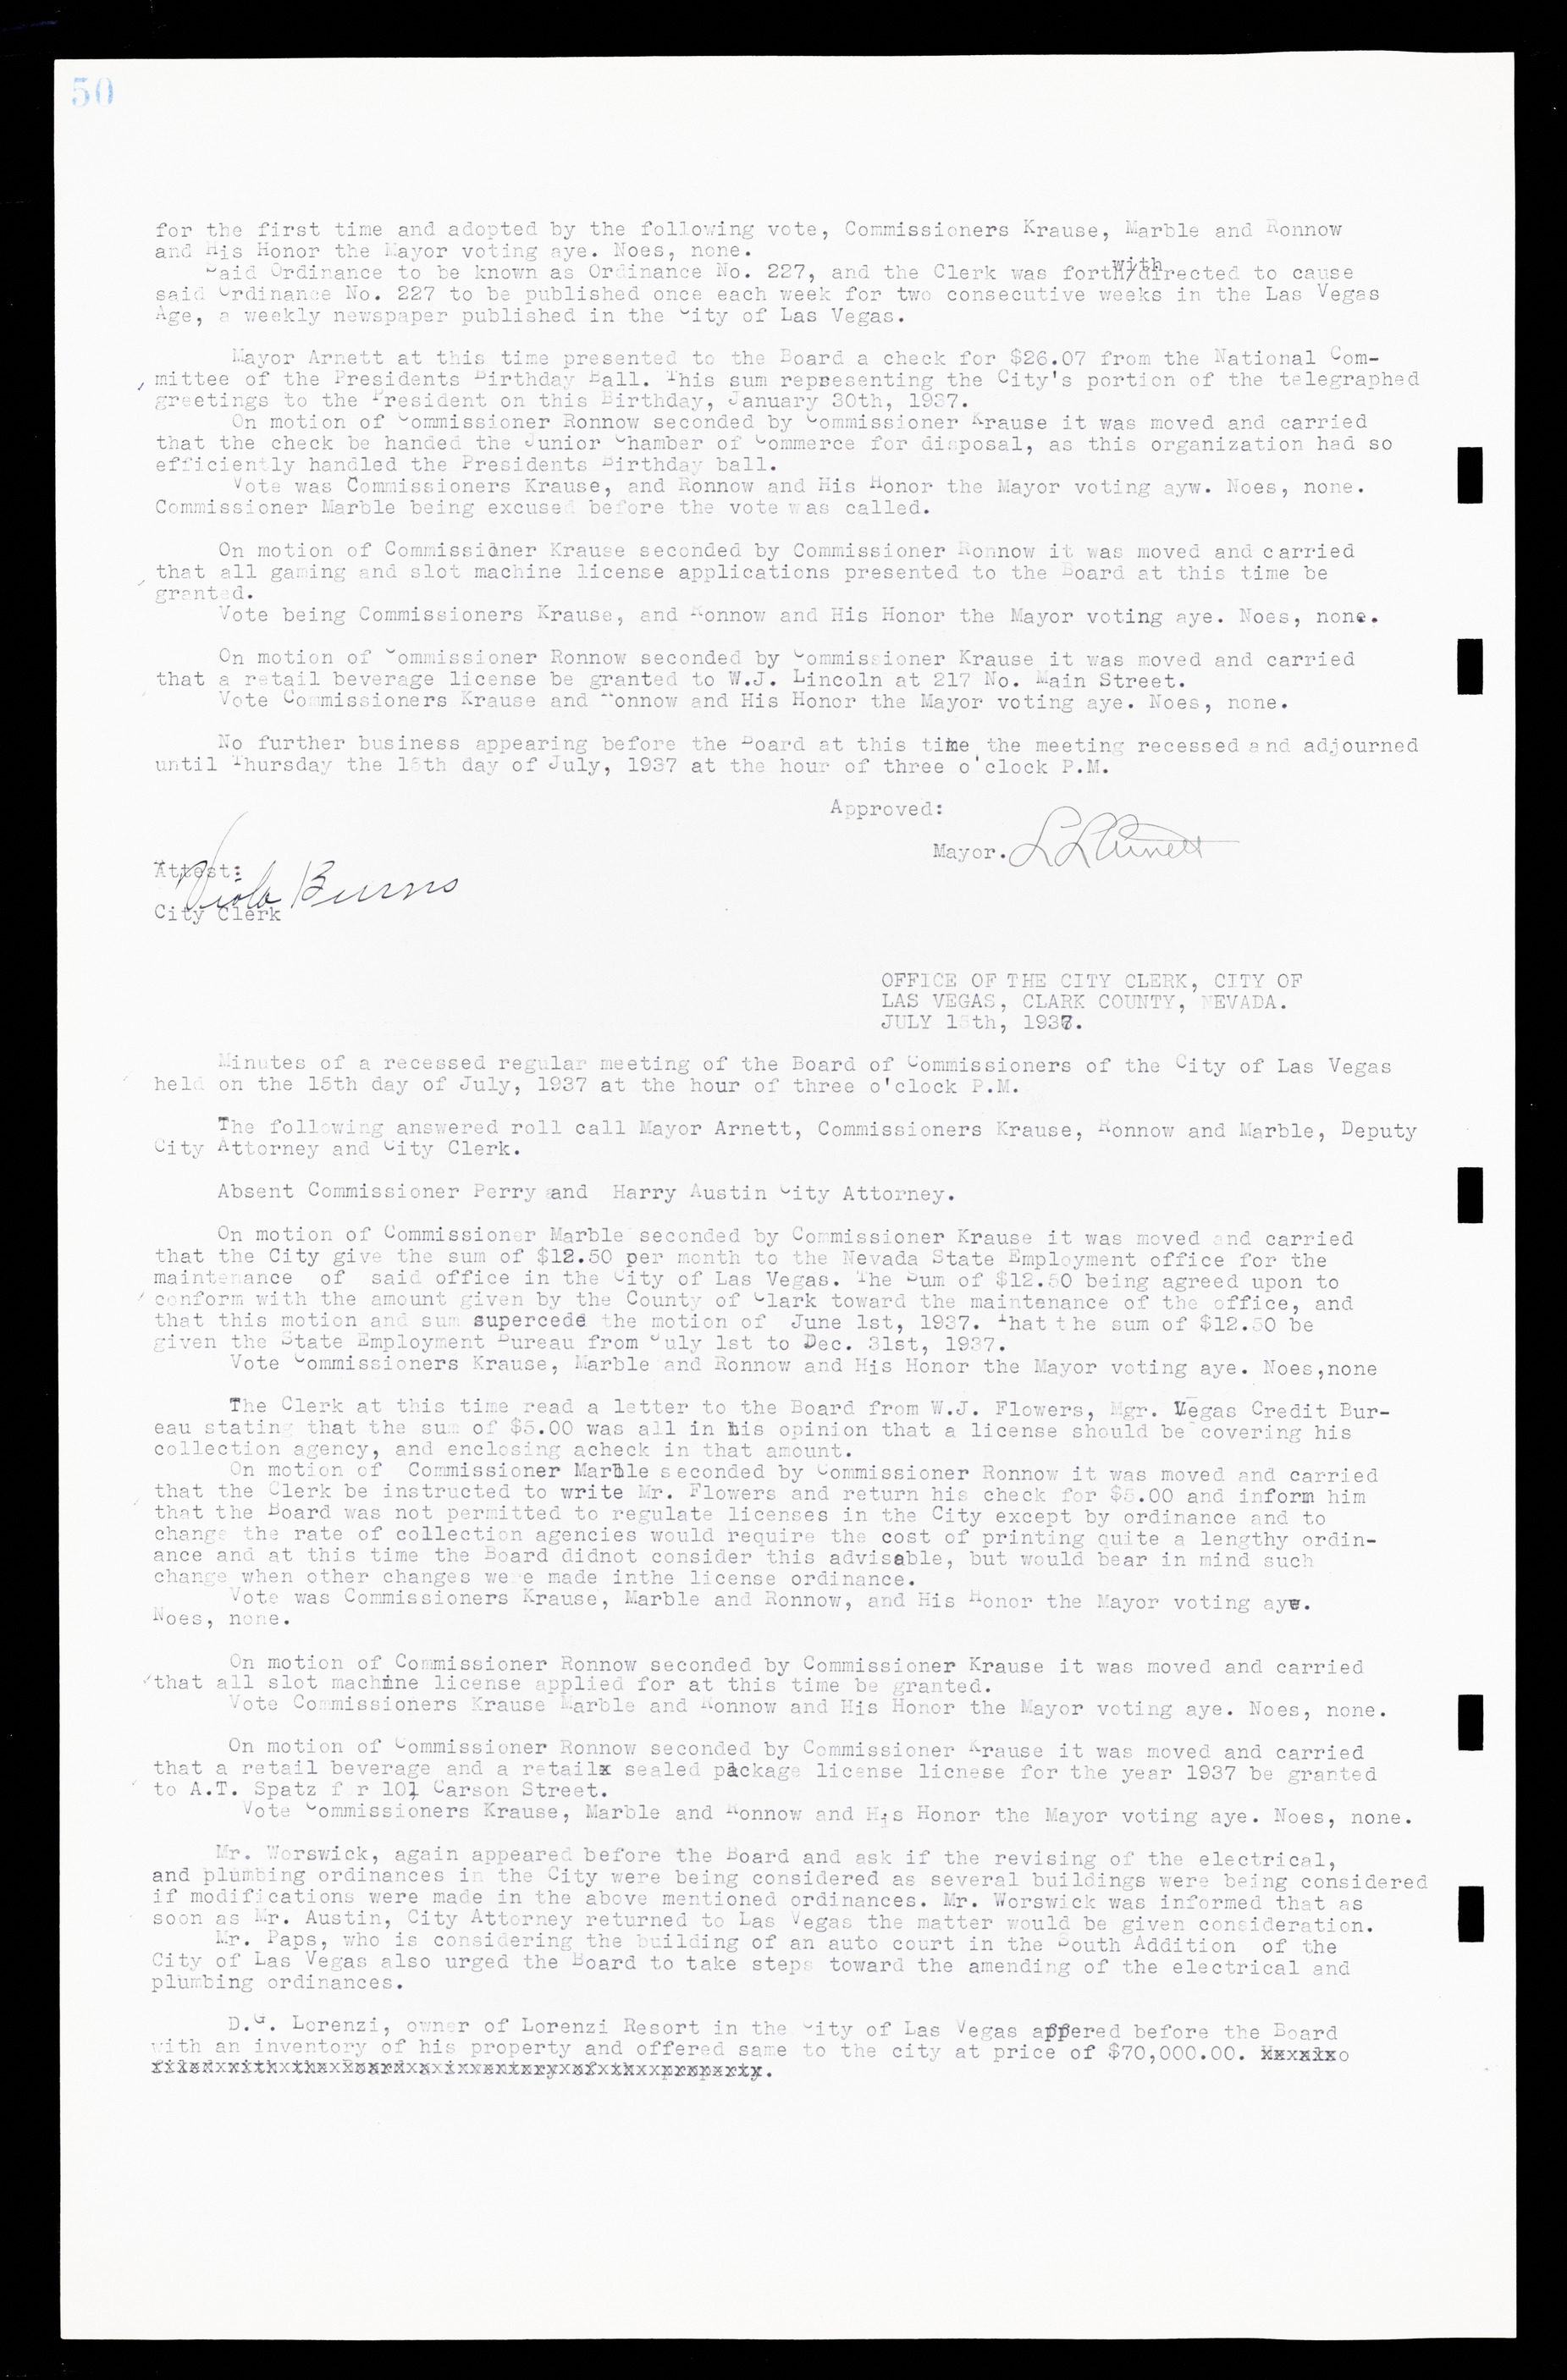 Las Vegas City Commission Minutes, February 17, 1937 to August 4, 1942, lvc000004-58